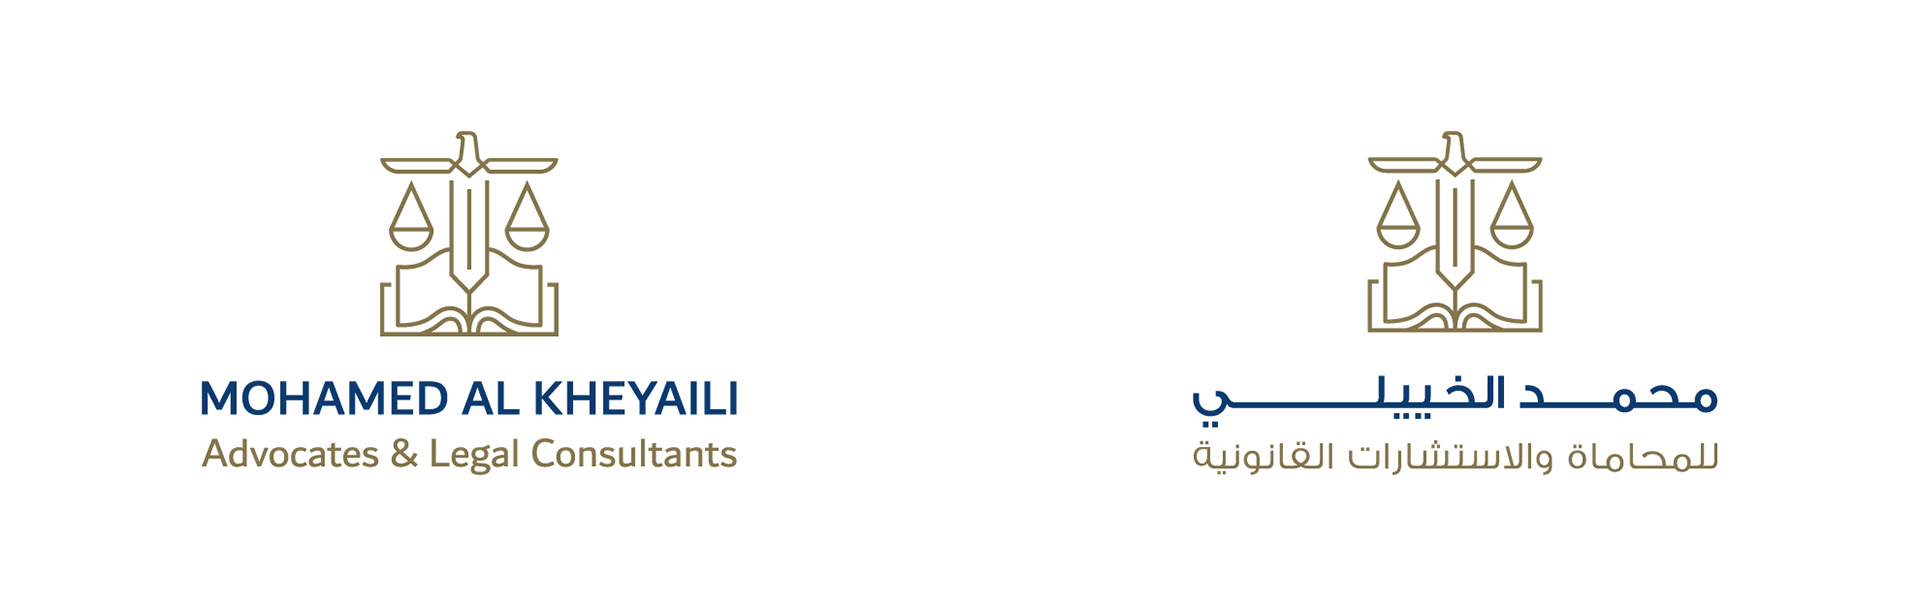 mohamed-al-kheyaili_logos_english-arabic